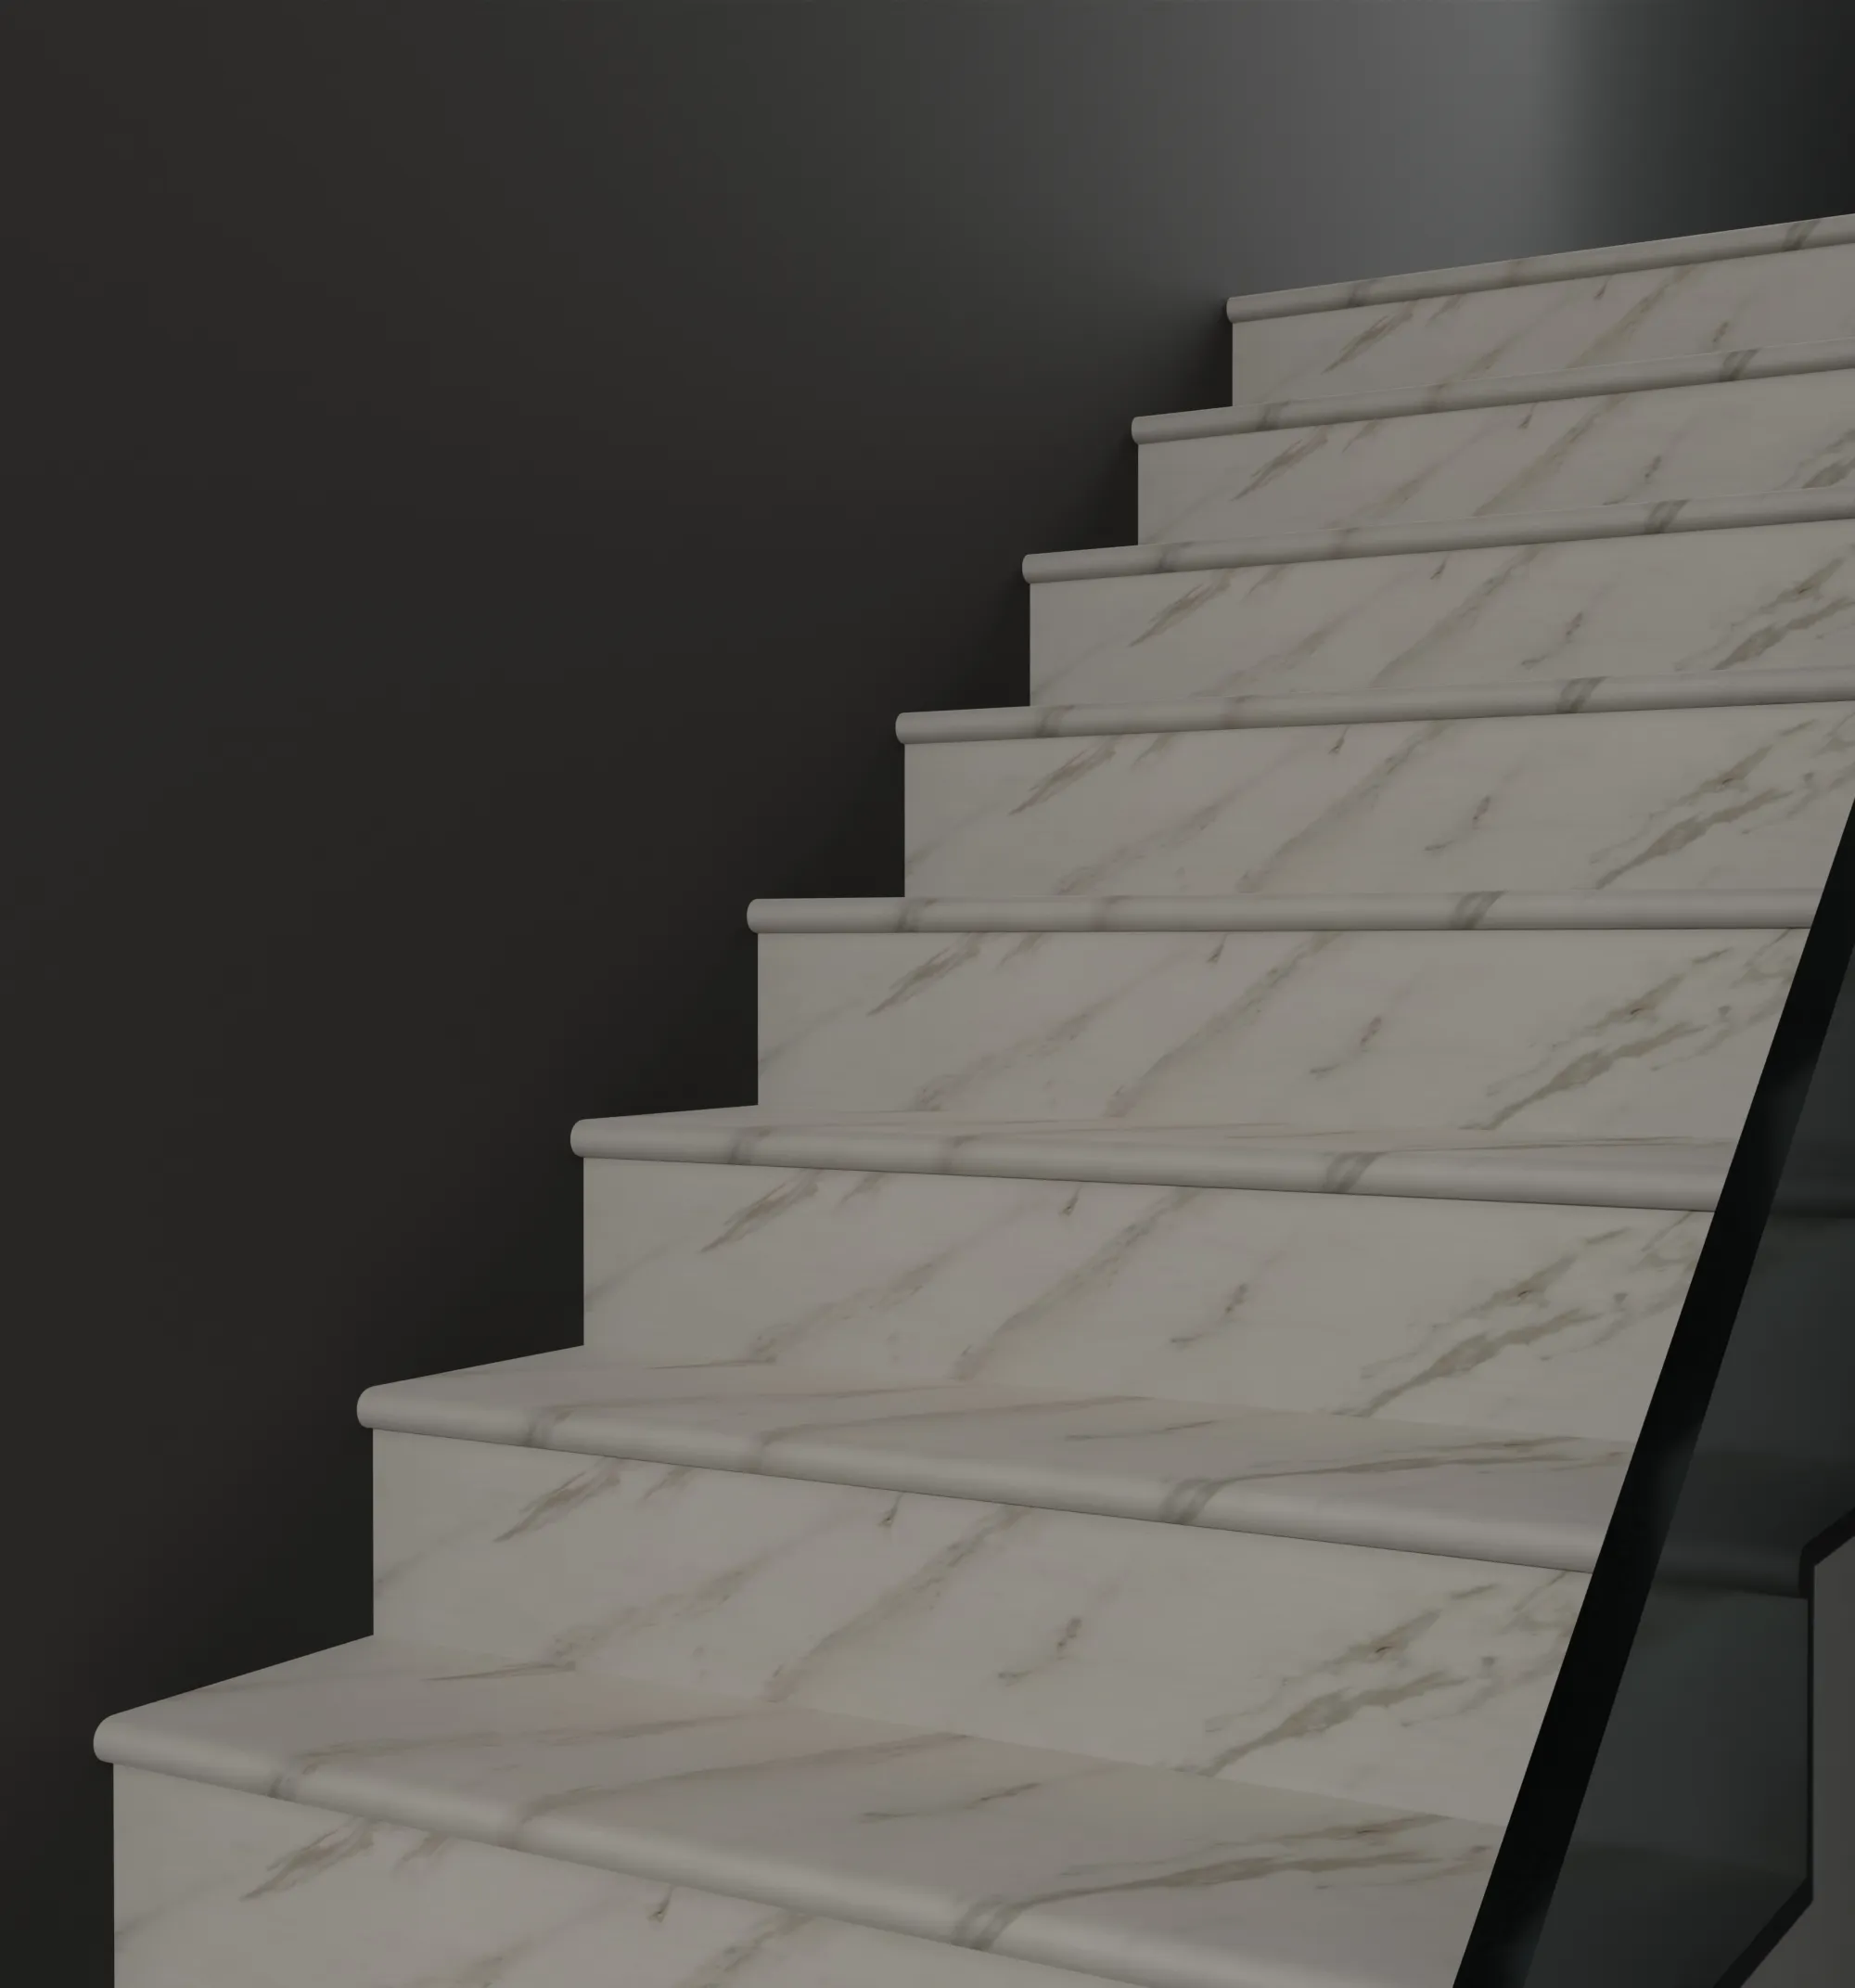 Schlussverkauf Indoor Massivholz-Bodenbelag Treppenstufen Spiraltreppenbausätze Treppenlauf